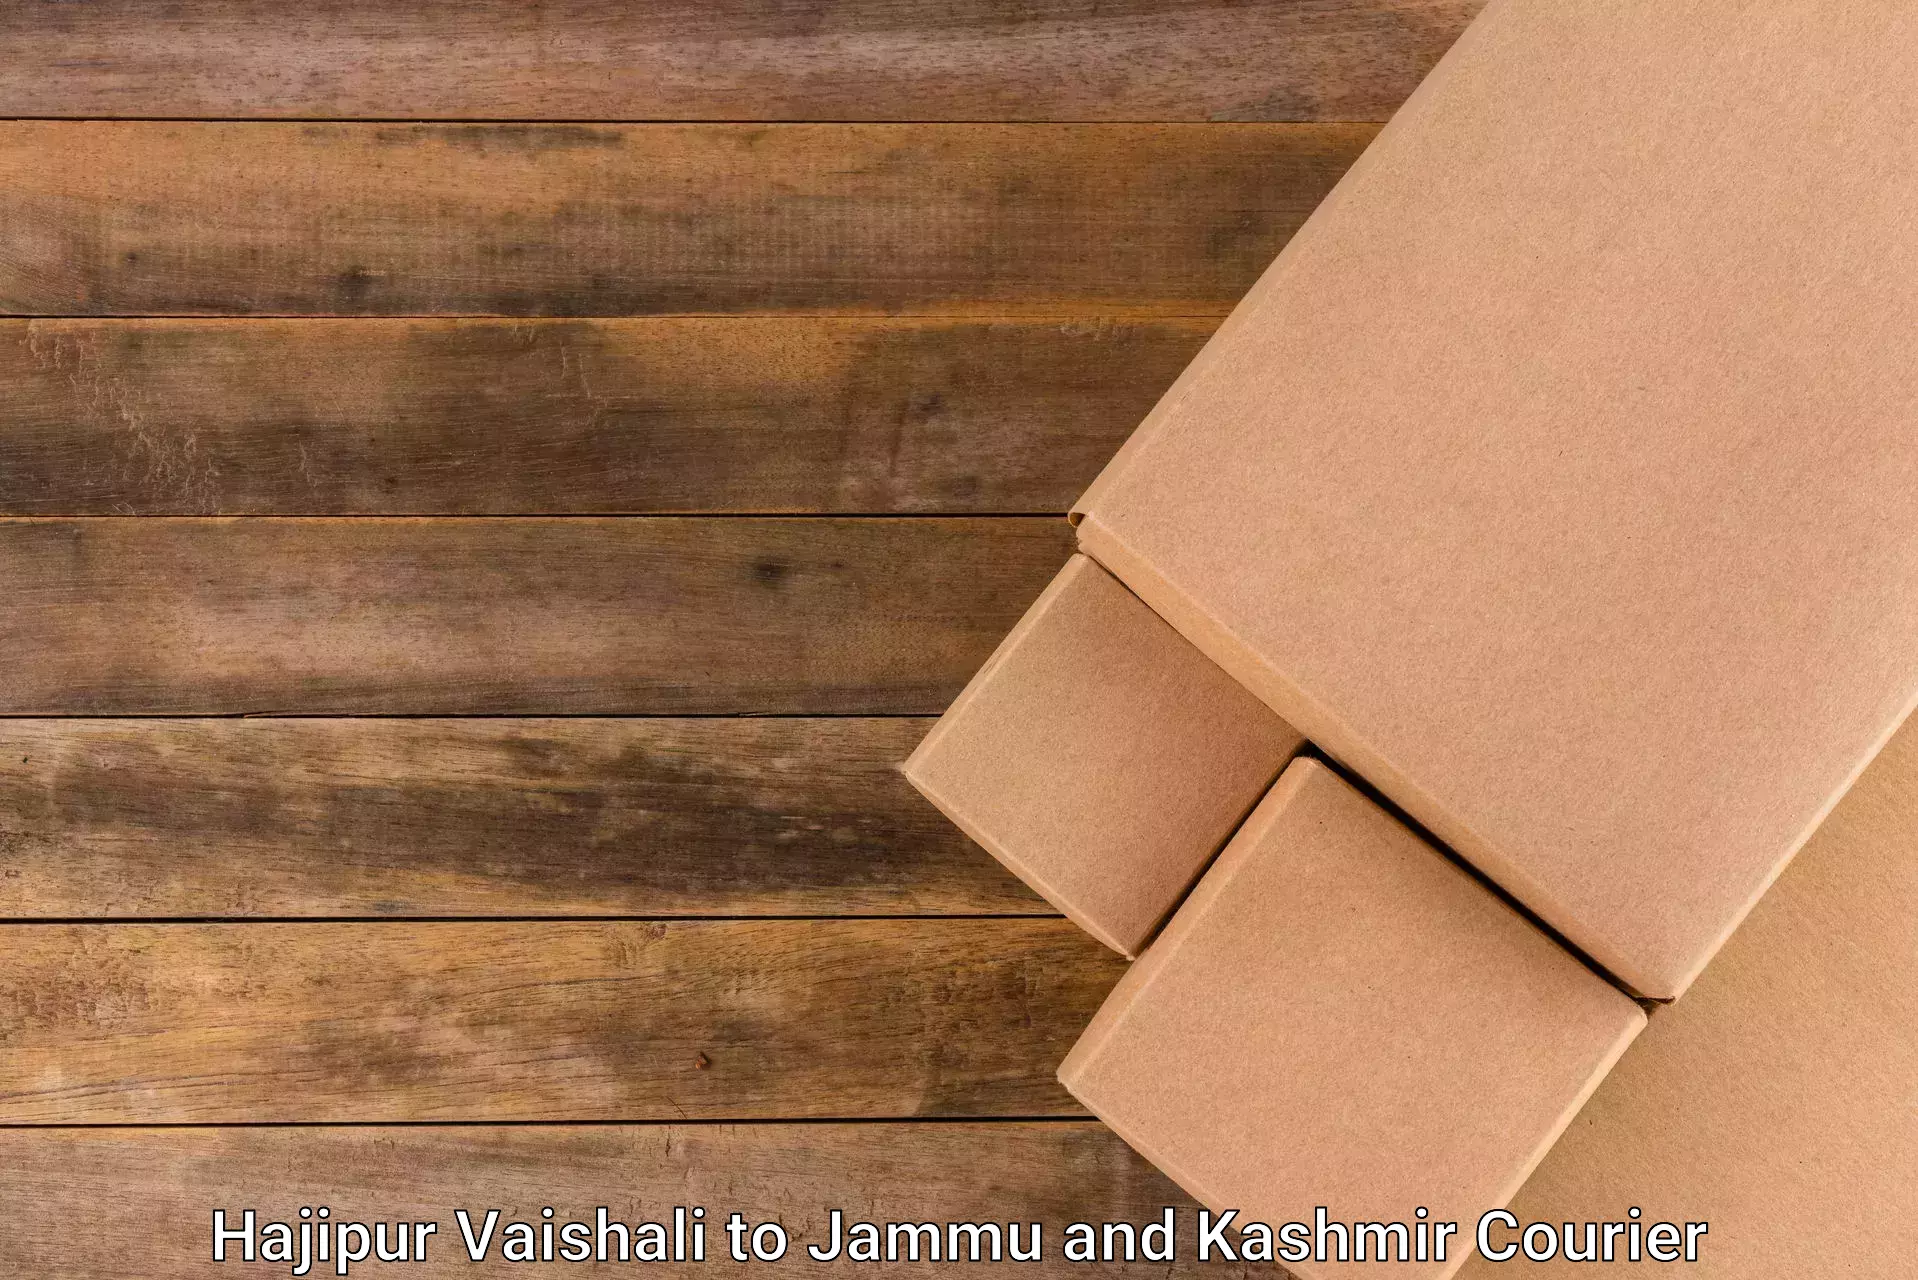 Courier service comparison in Hajipur Vaishali to Kishtwar